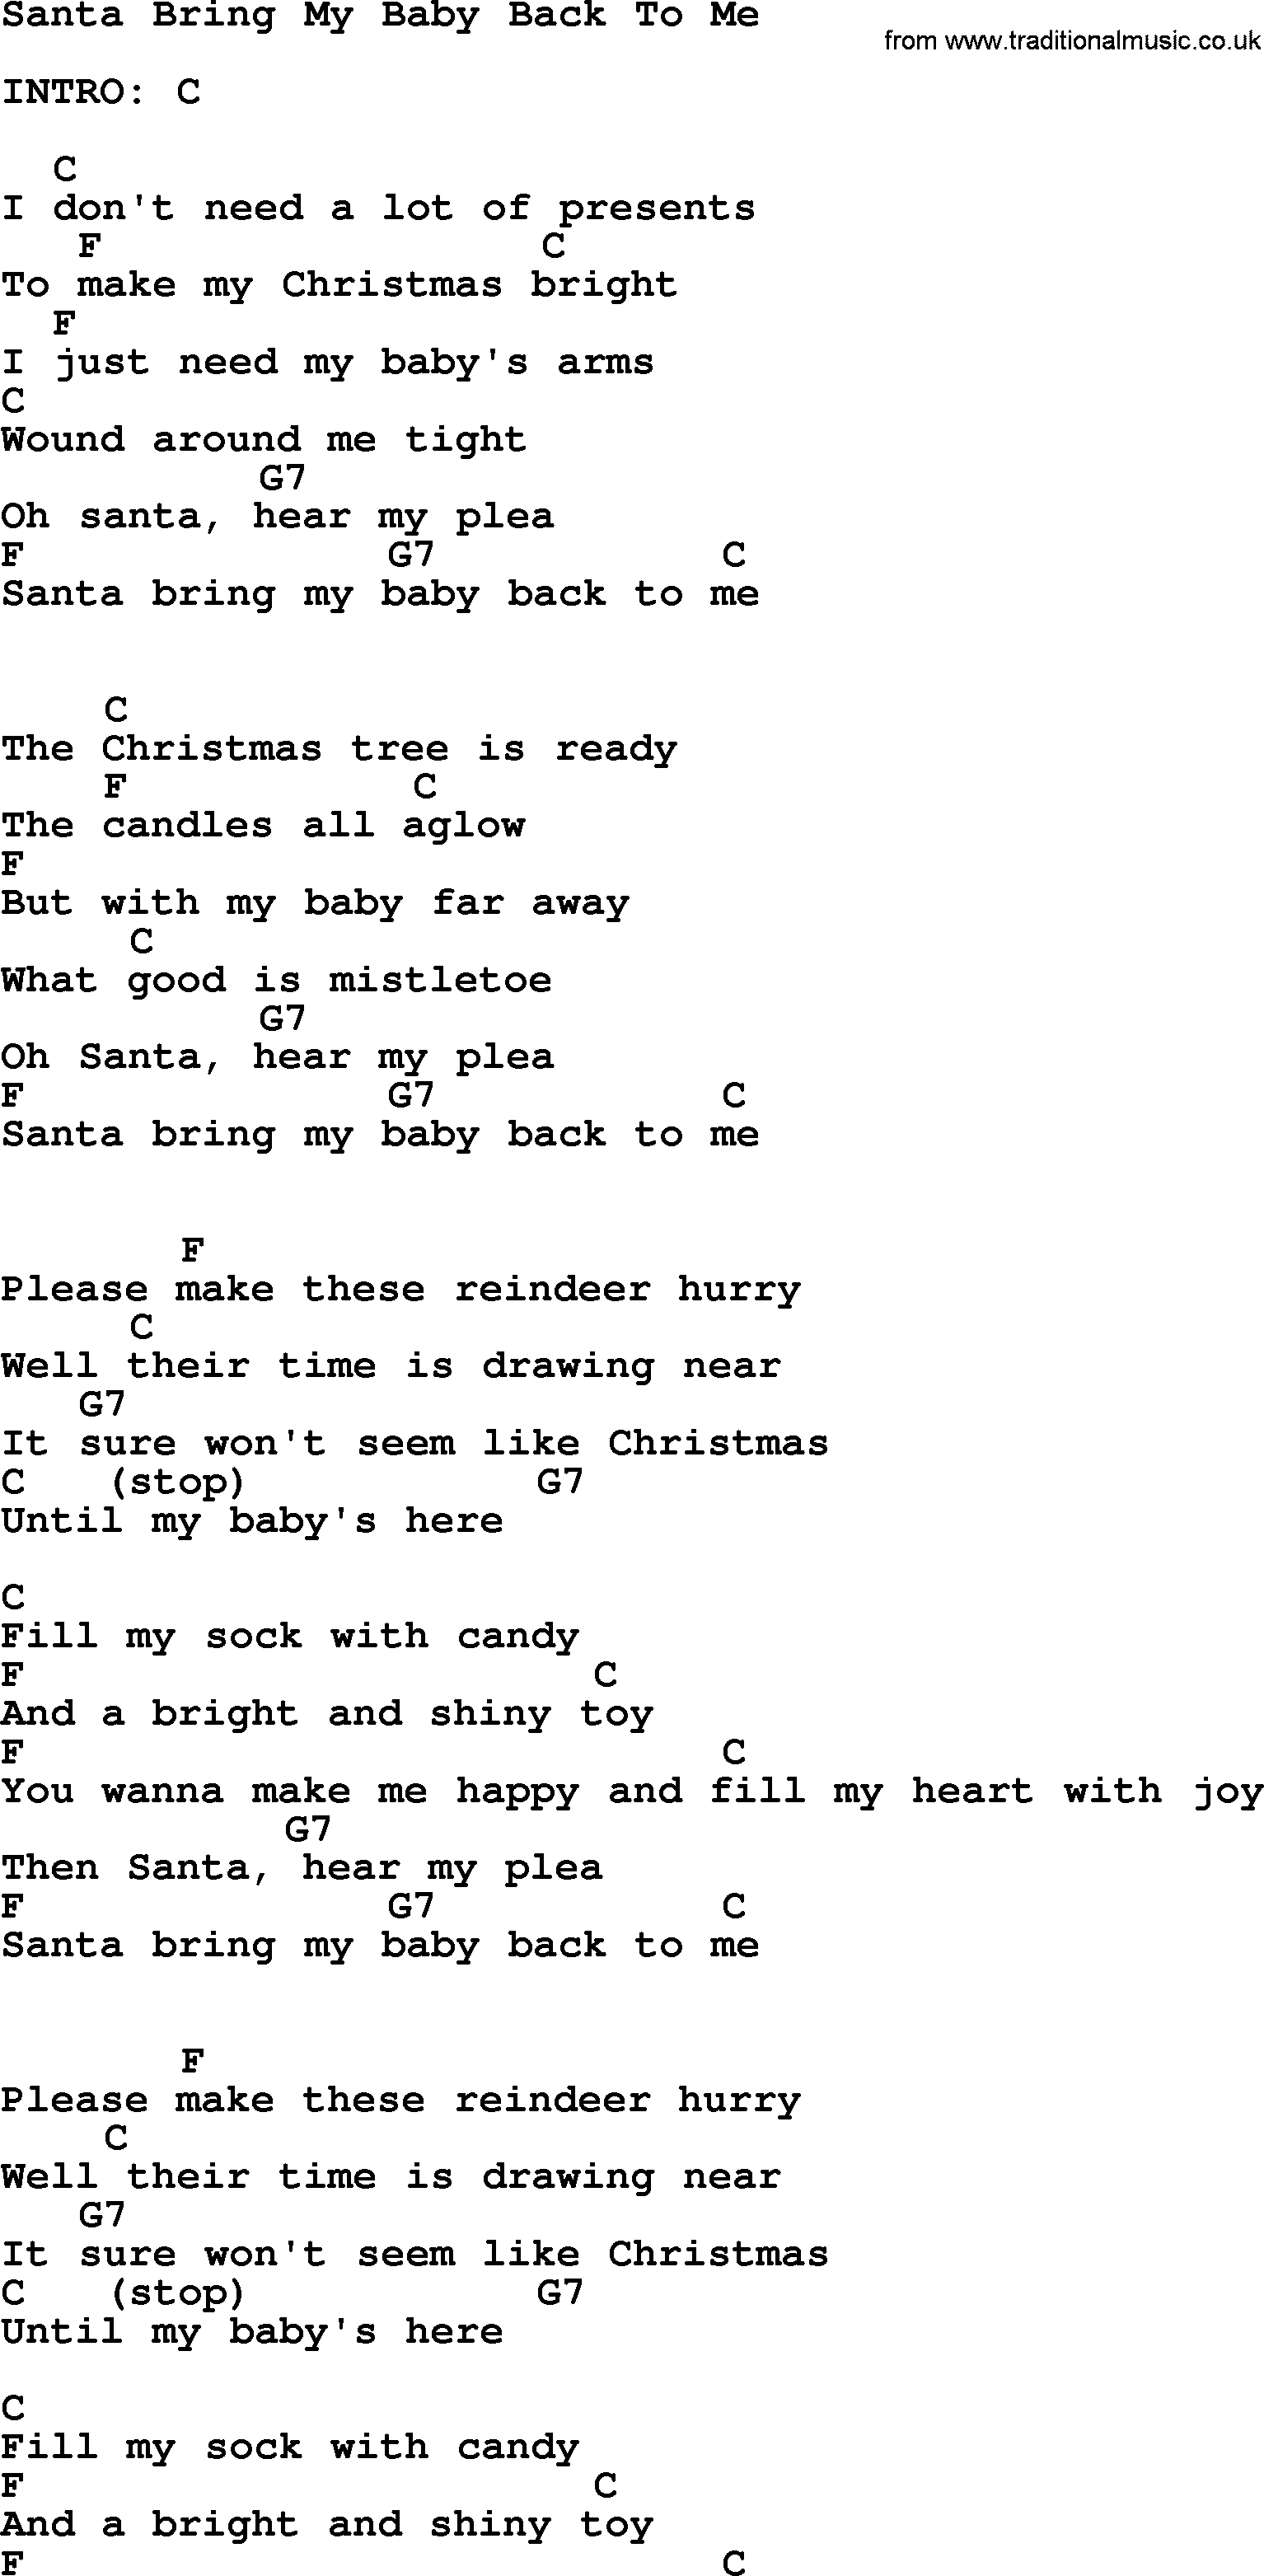 Elvis Presley song: Santa Bring My Baby Back To Me, lyrics and chords